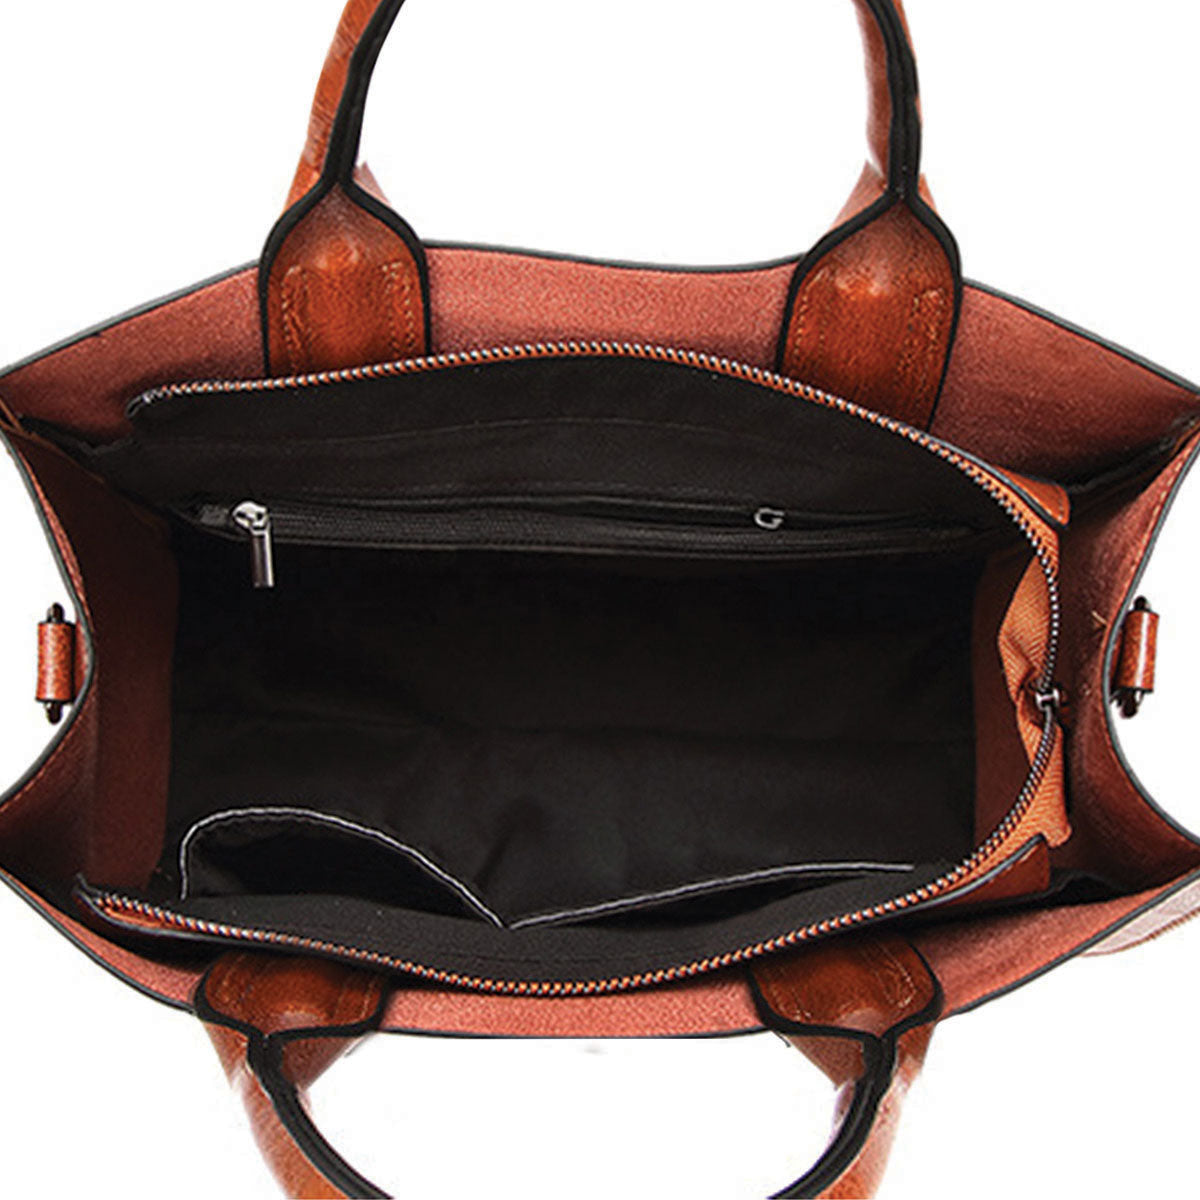 Your Best Companion - Golden Retriever Luxury Handbag V1